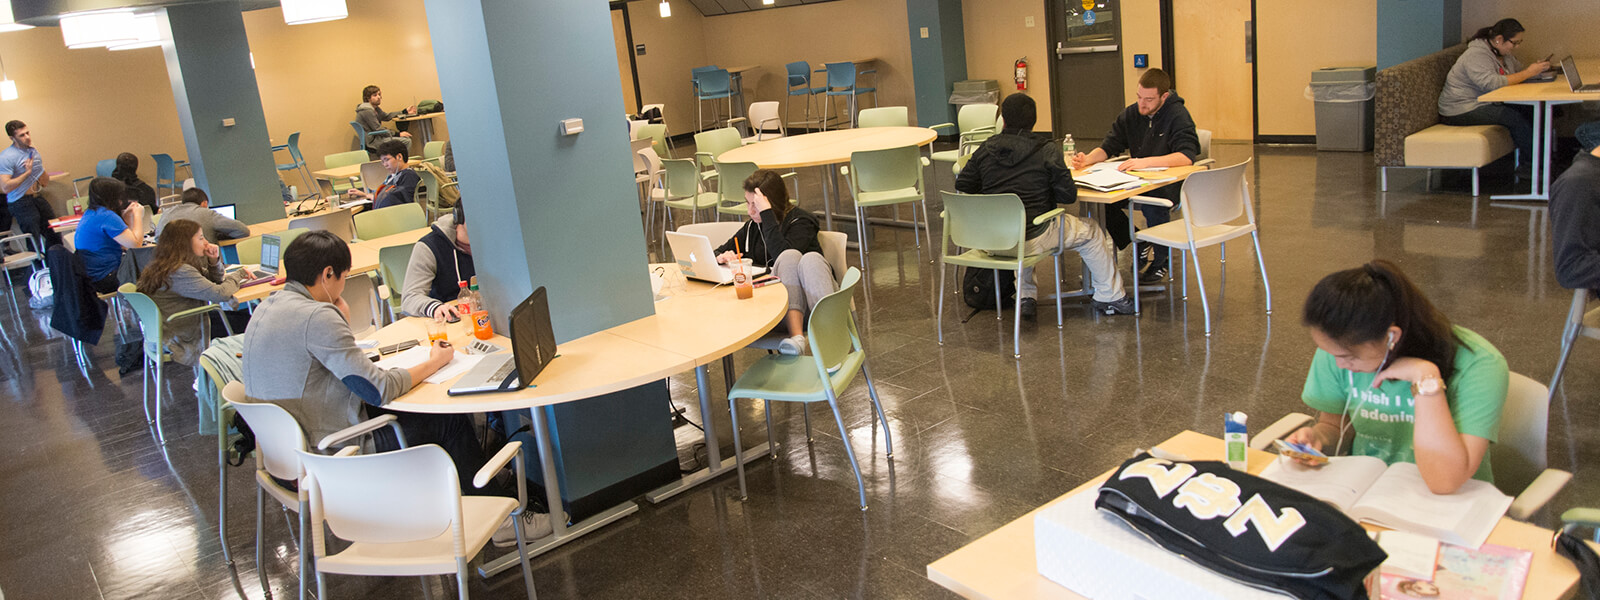 Group Study Room FAQ and Policies - Libraries | Binghamton University